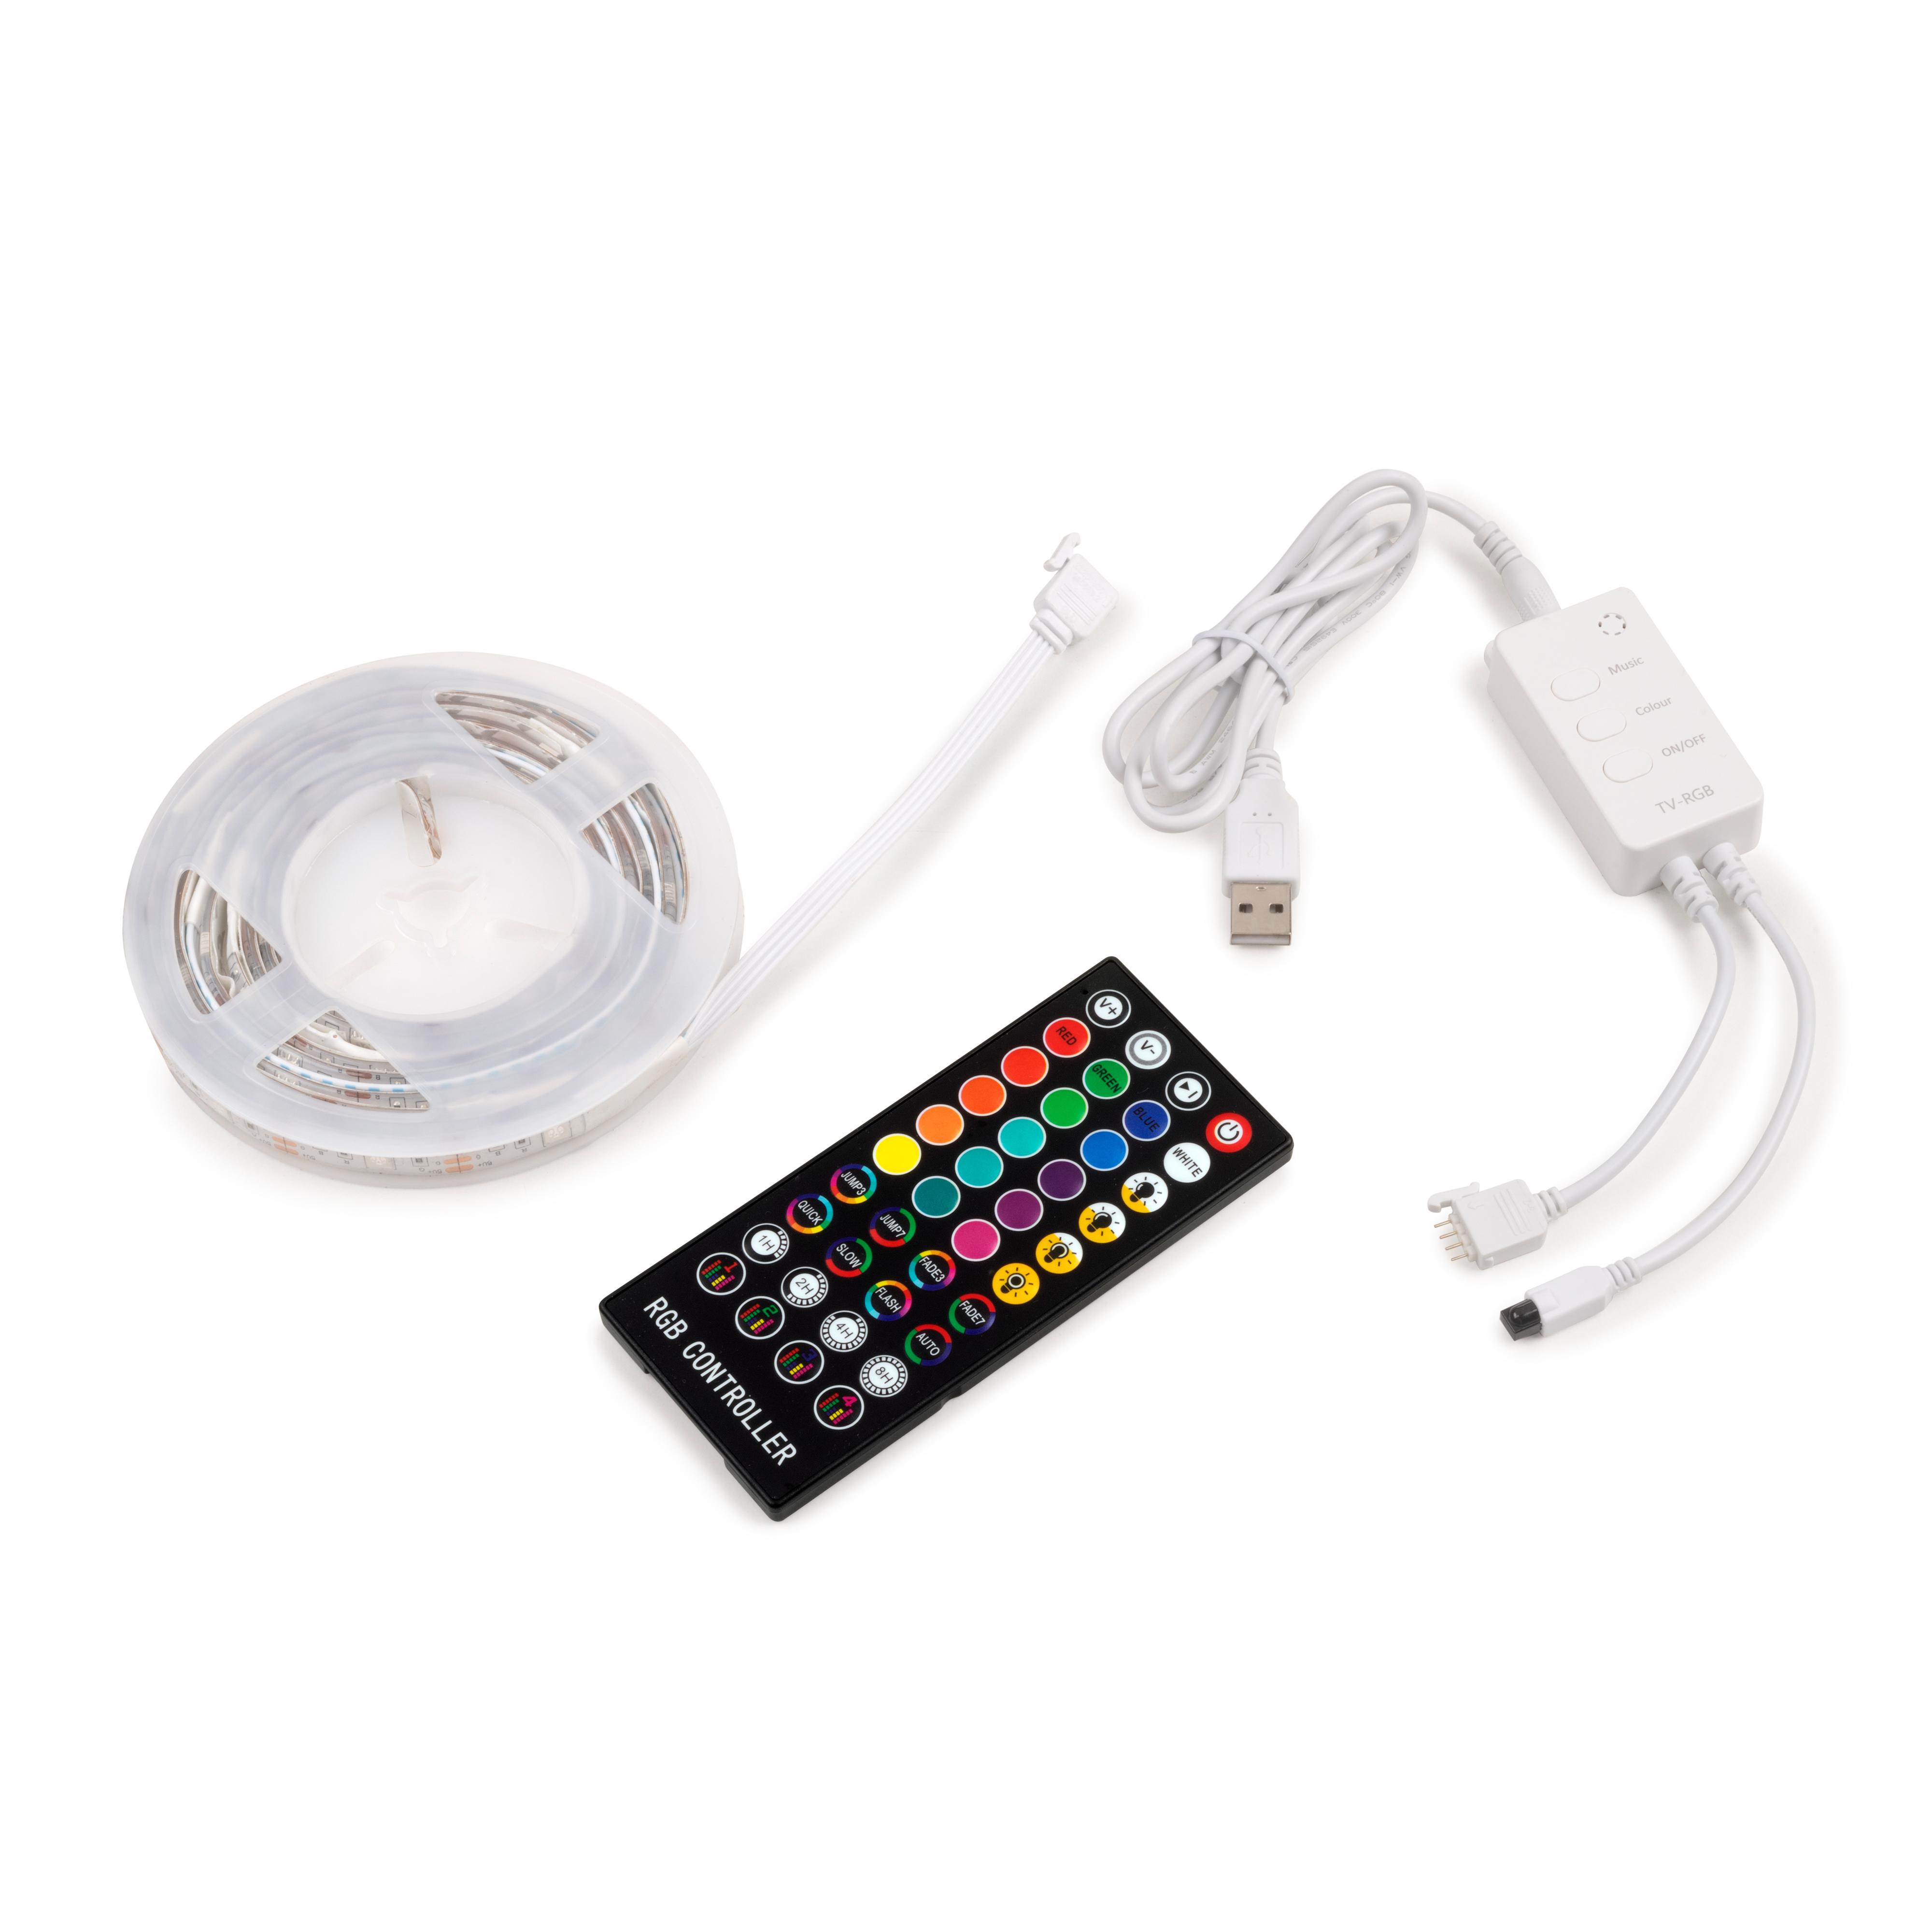 Kit de LED RGB Octans USB con control remoto y control WIFI mediante APP (5V DC), 4 x 0,5 m, Plástico, ud.